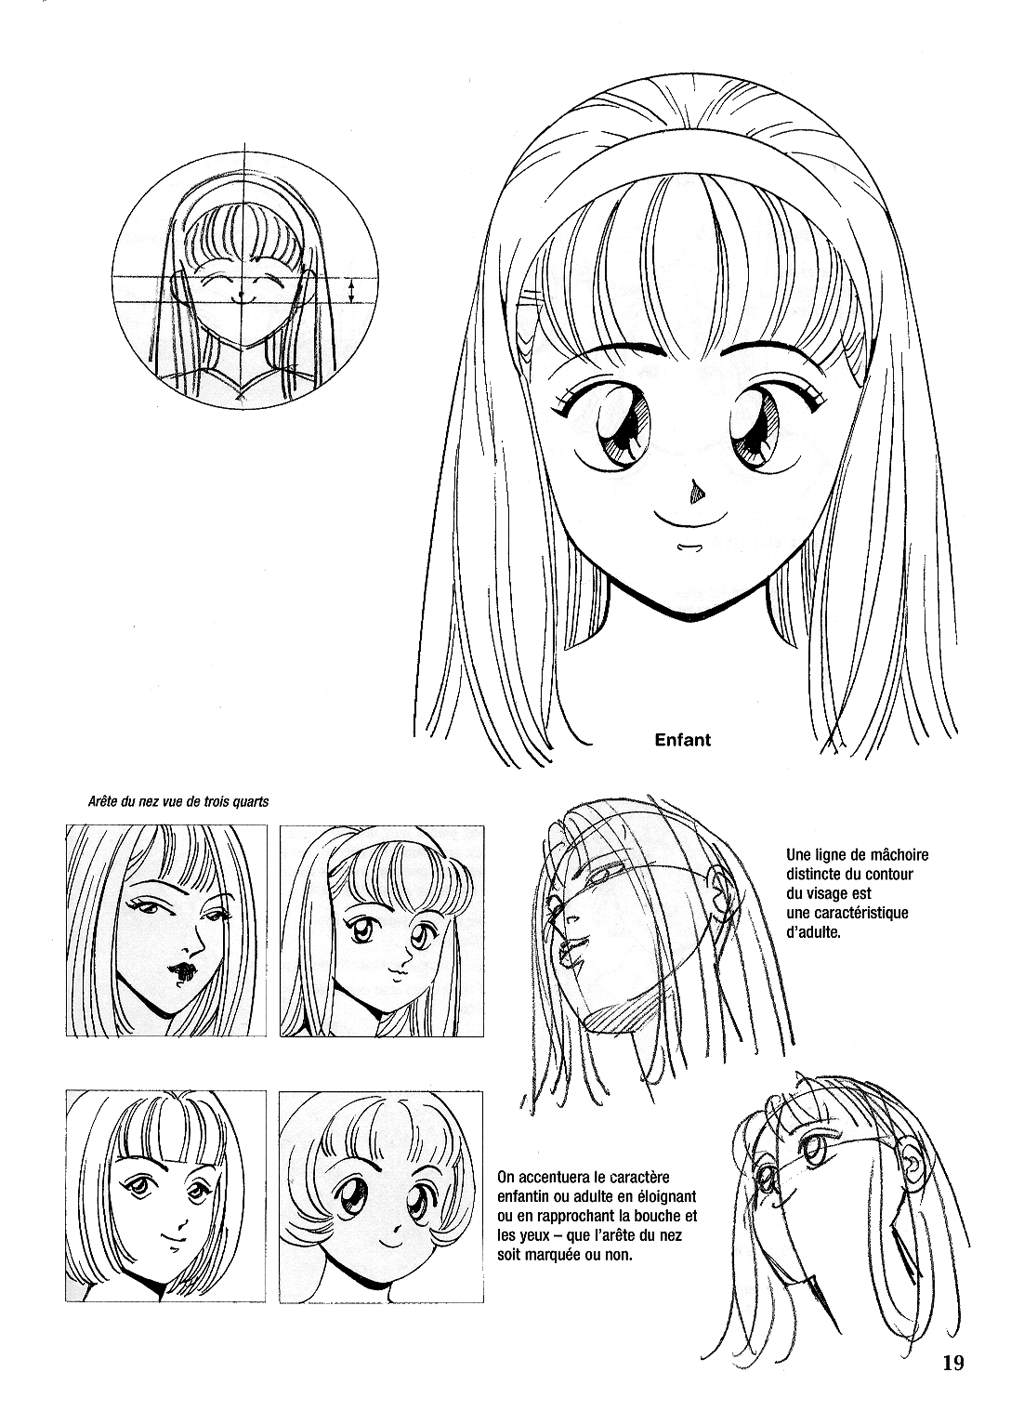 [Hikaru Hayashi] Le dessin du Manga 04 - Personnages feminin, Attitudes, Expressions [French]] 